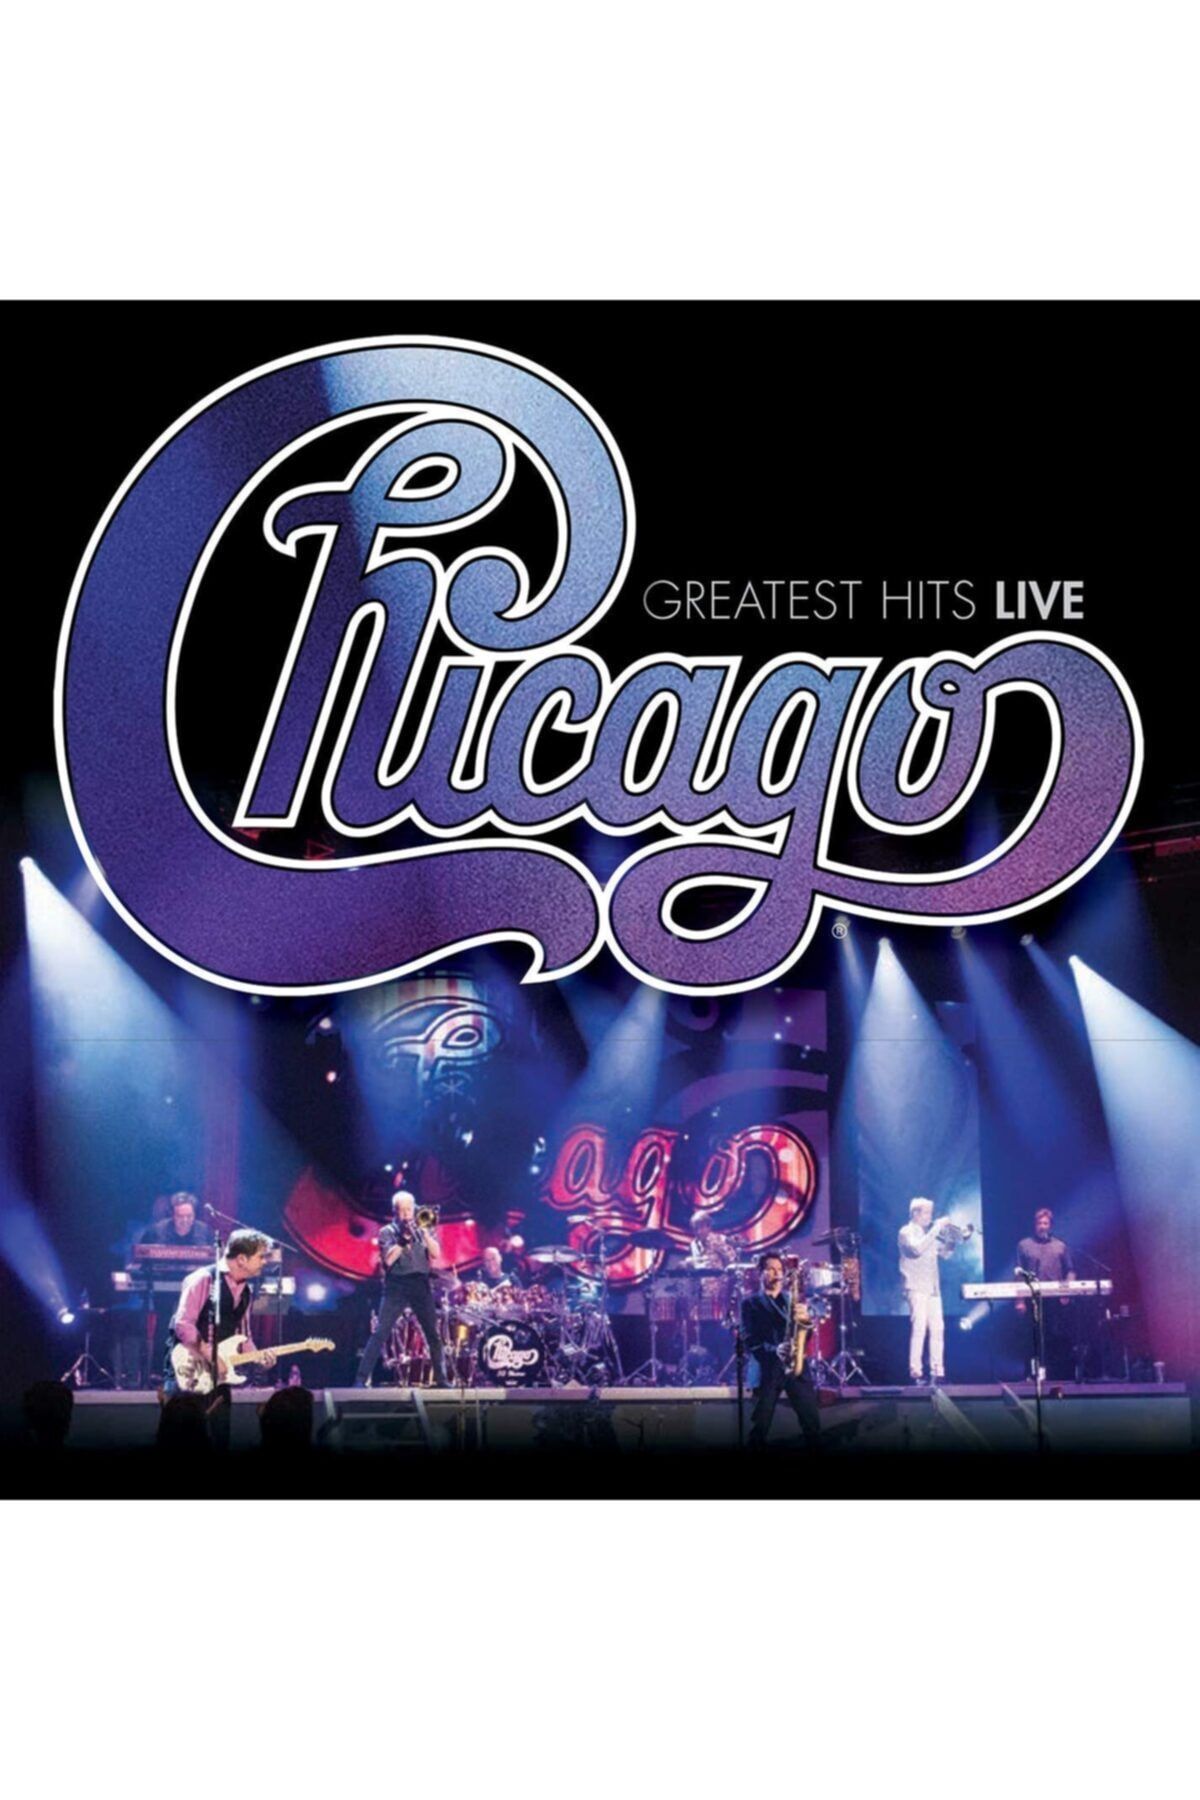 Rhino Chicago -greatest Hits Live - Cd